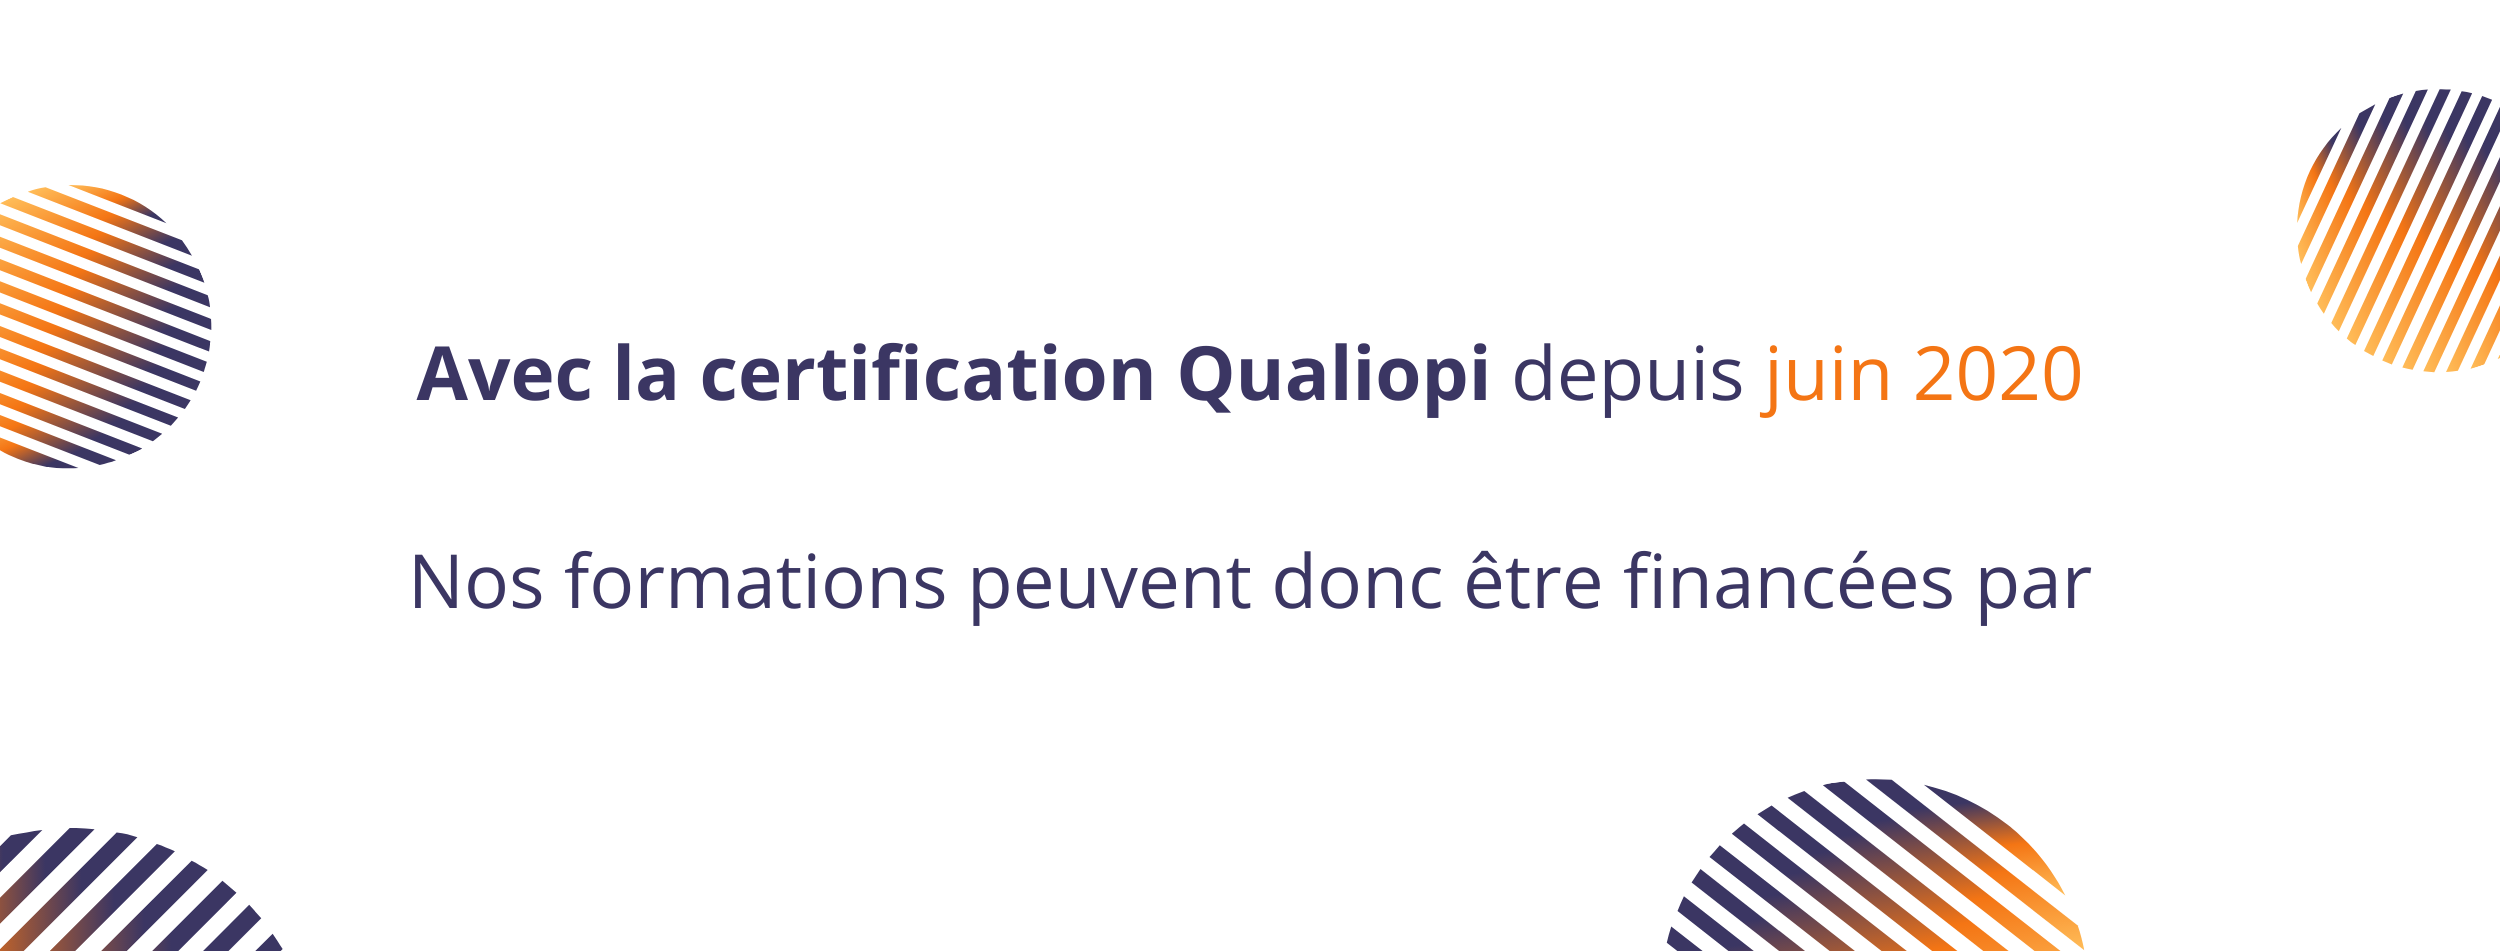 Certification Qualiopi - OFI-Formation